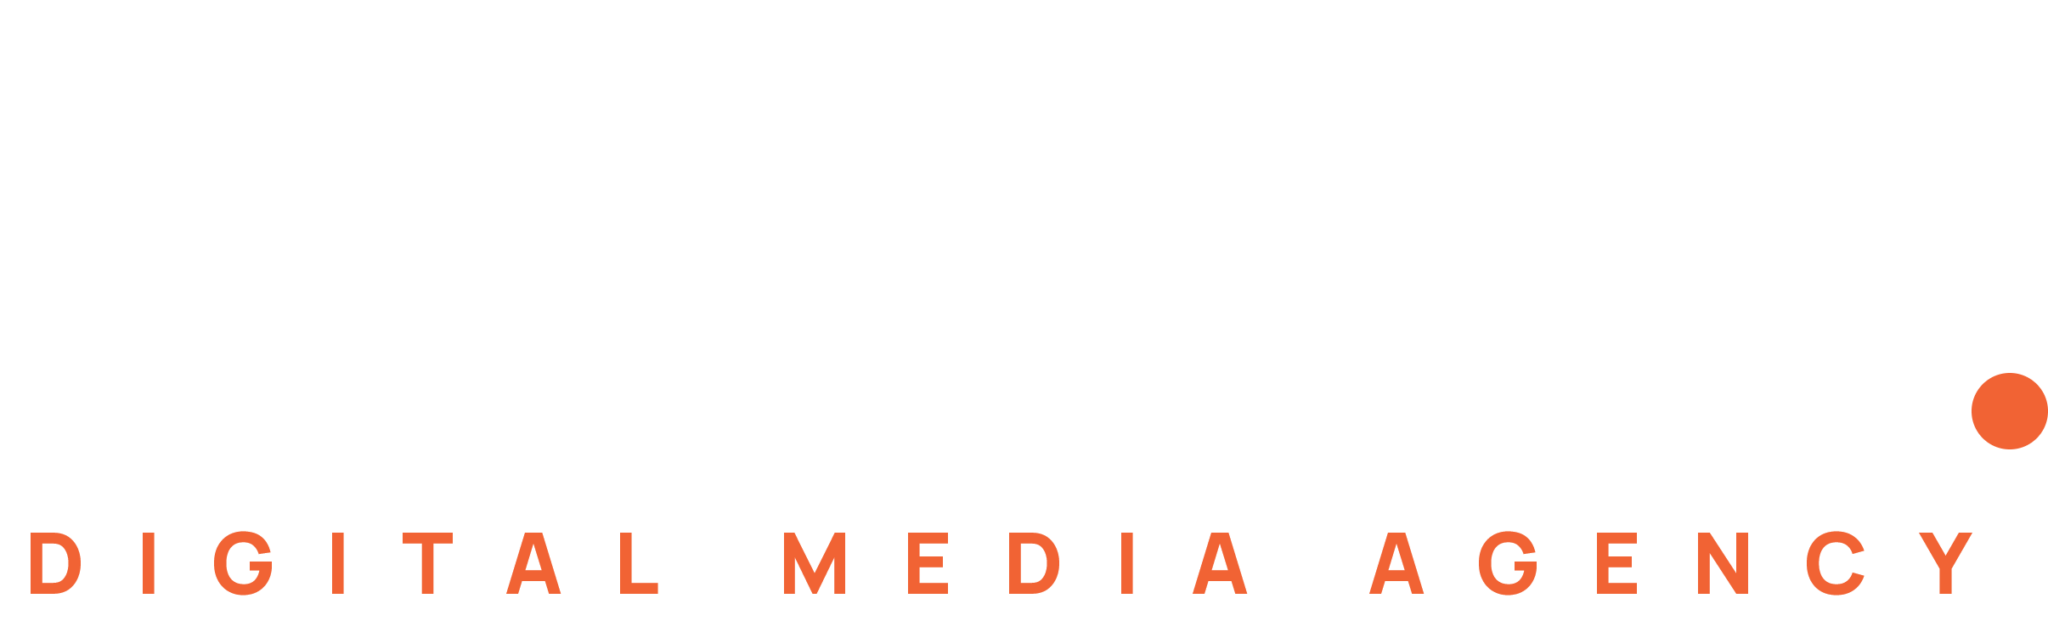 Betasaurus Digital Agency